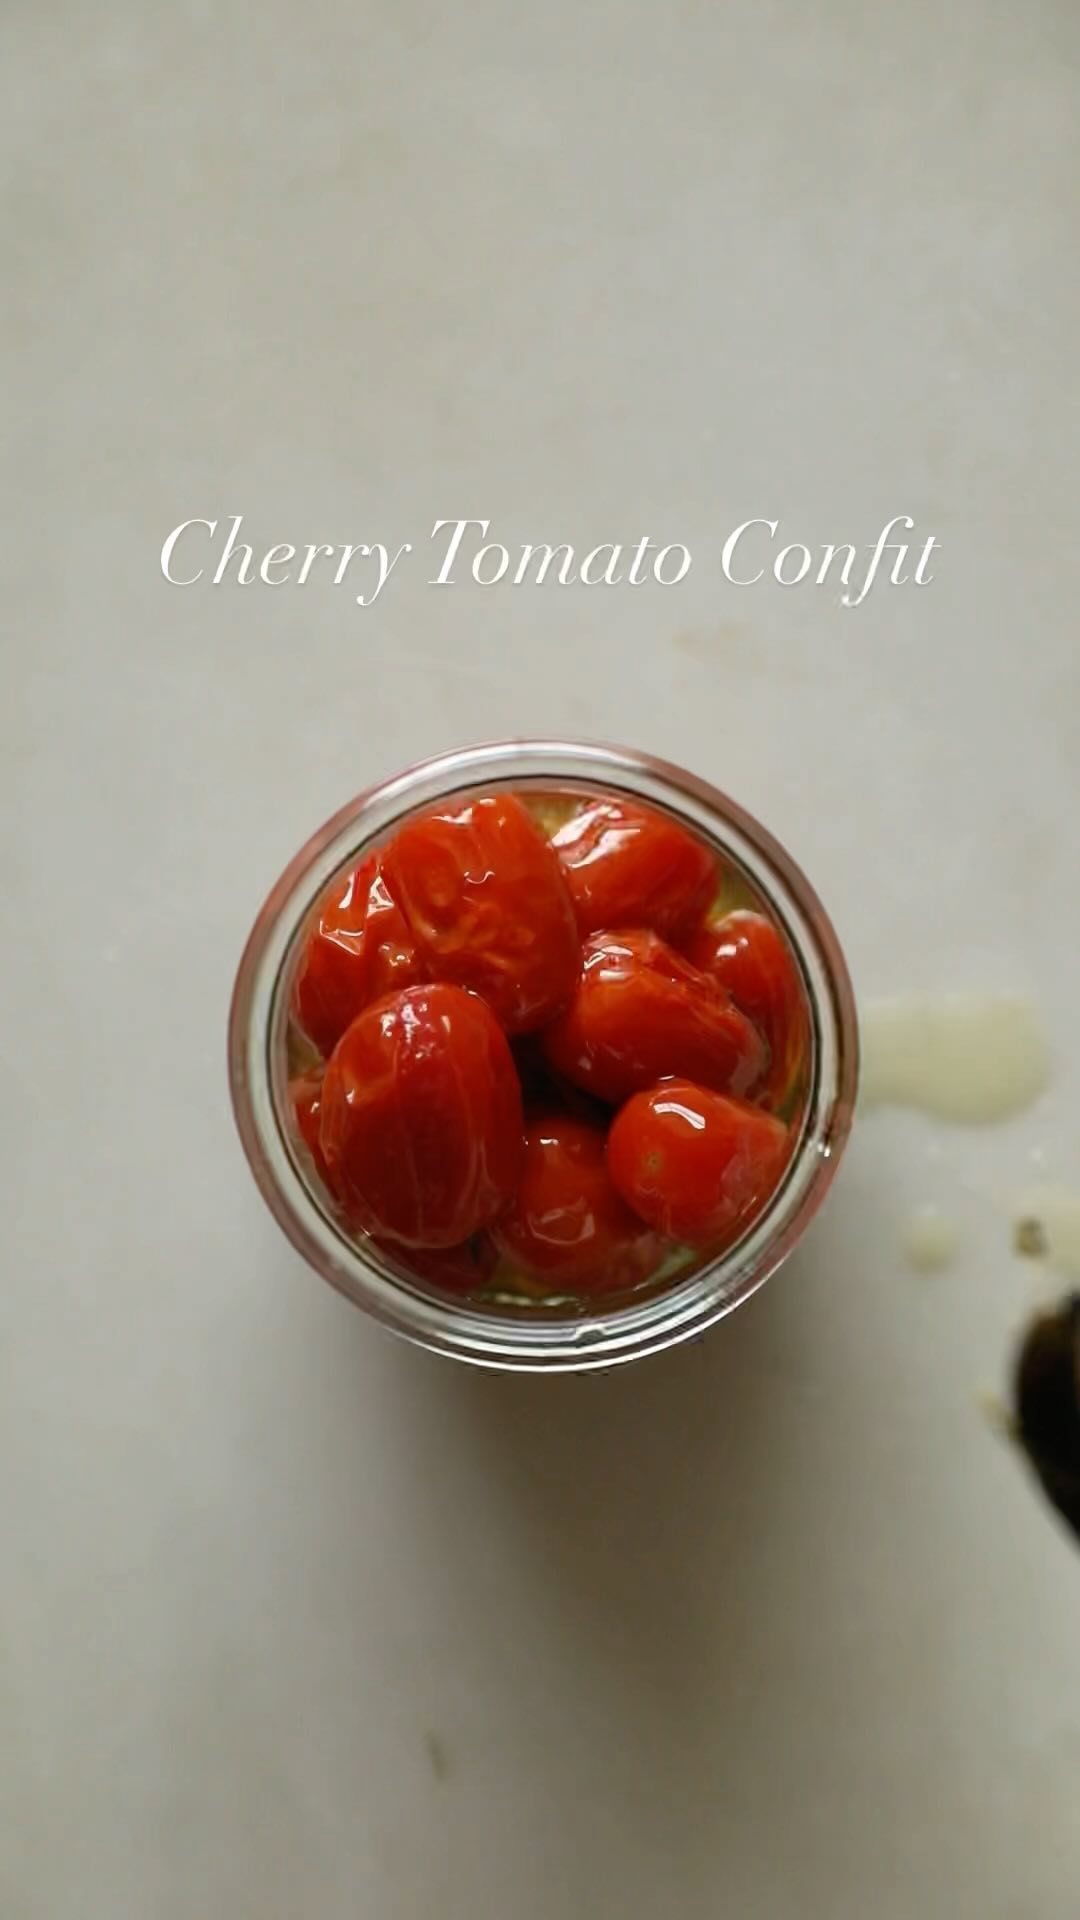 Cherry Tomato Confit 🍅

#tomatoconfit#roastedtomatoes#simpelfood#tomat#matglede#matprat #godtno#flatlayfood